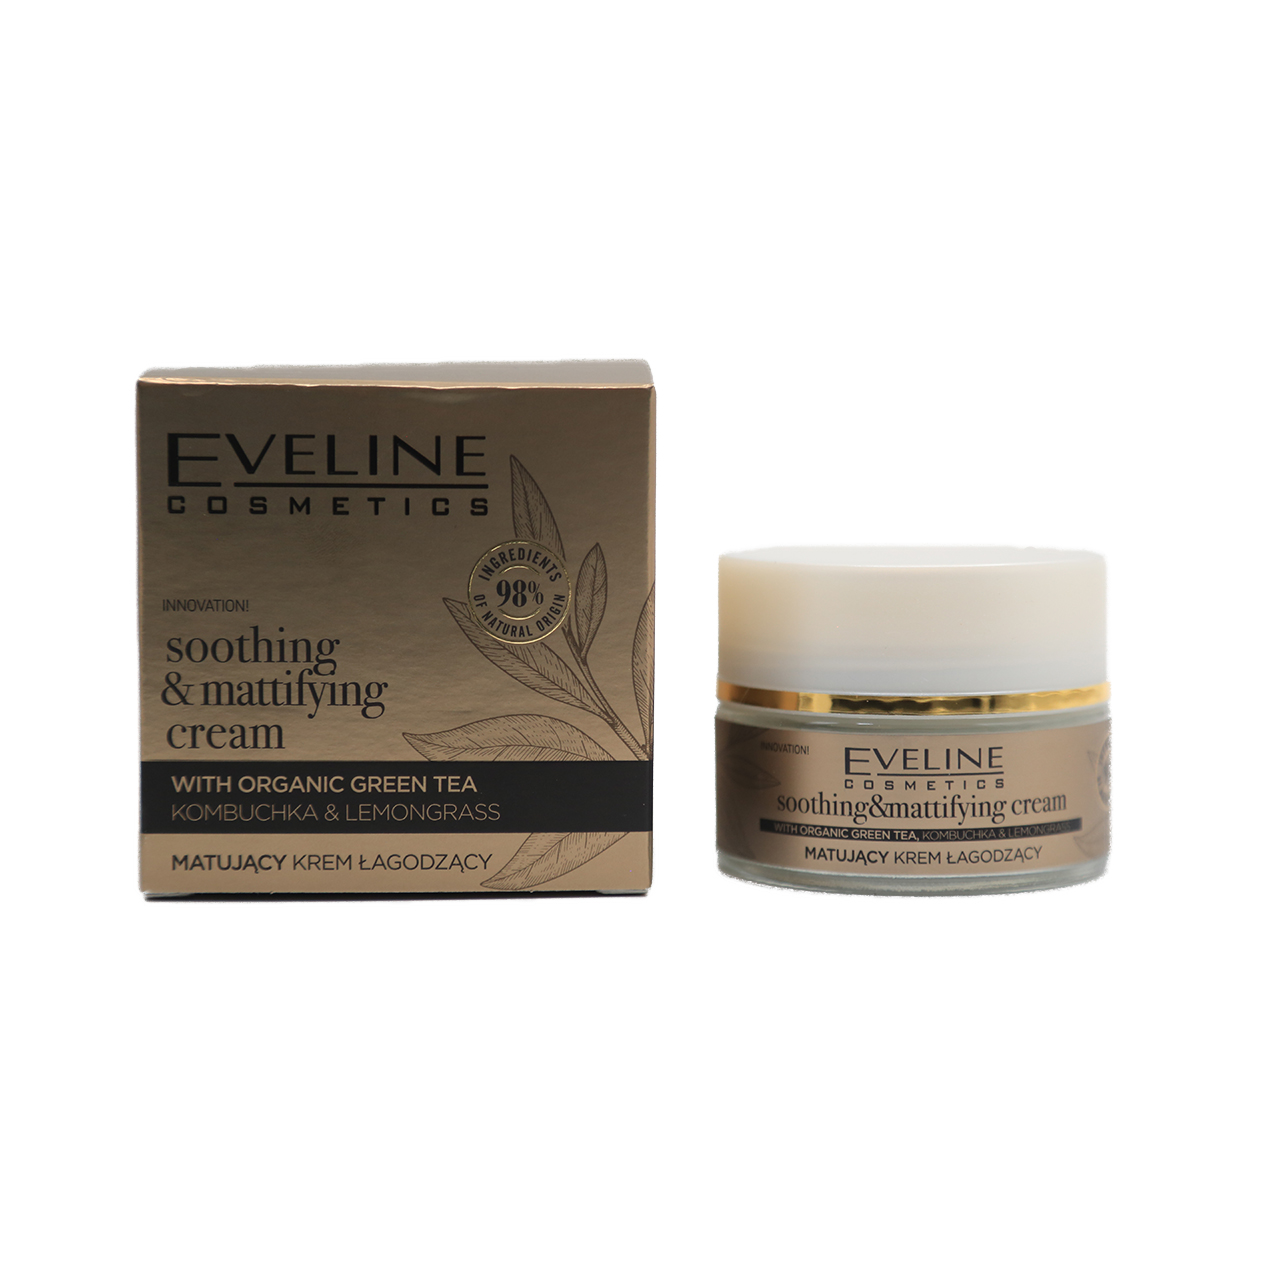 198-5903416030225-Eveline Cosmetic Soothinng and Mattifying Cream with Organic Green Tea, Kombuchka & Lemongrass 50ml